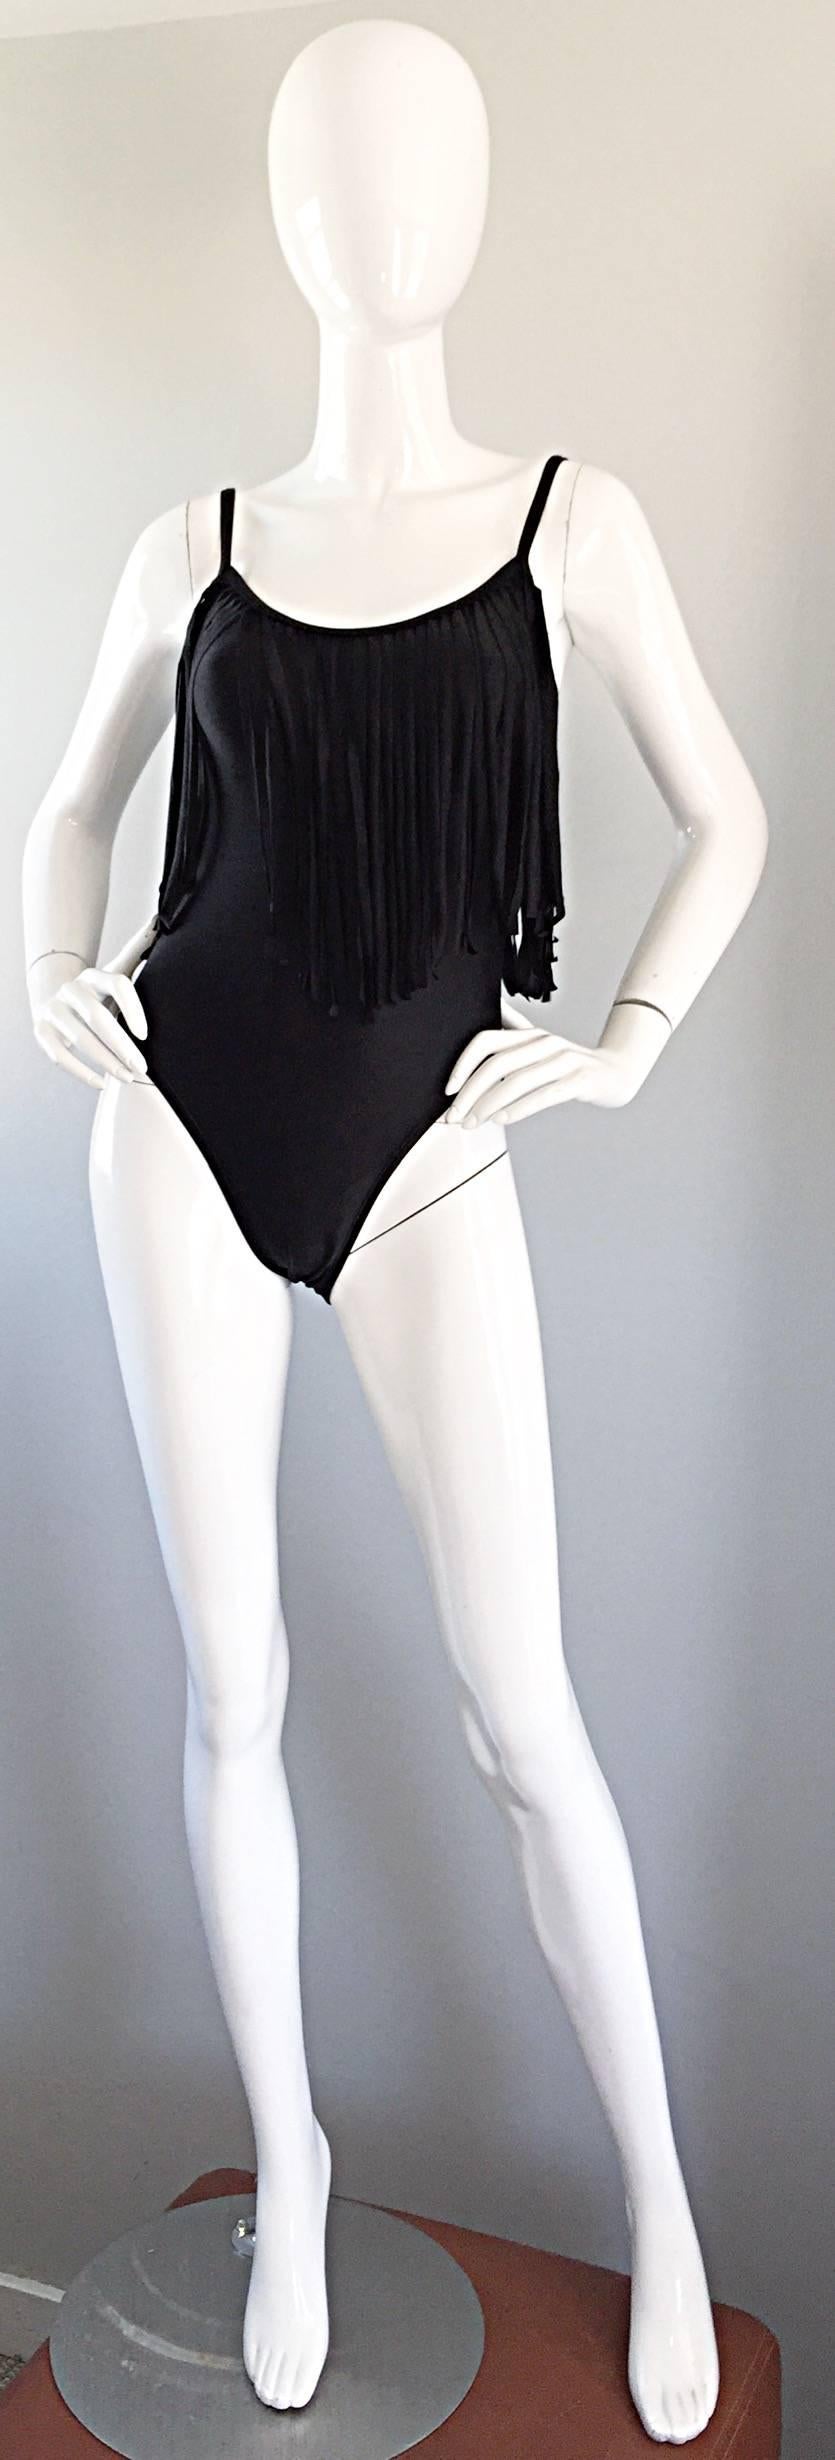 Oscar de la Renta Vintage Black Fringed One Piece Swimsuit / Bodysuit Leotard For Sale 2